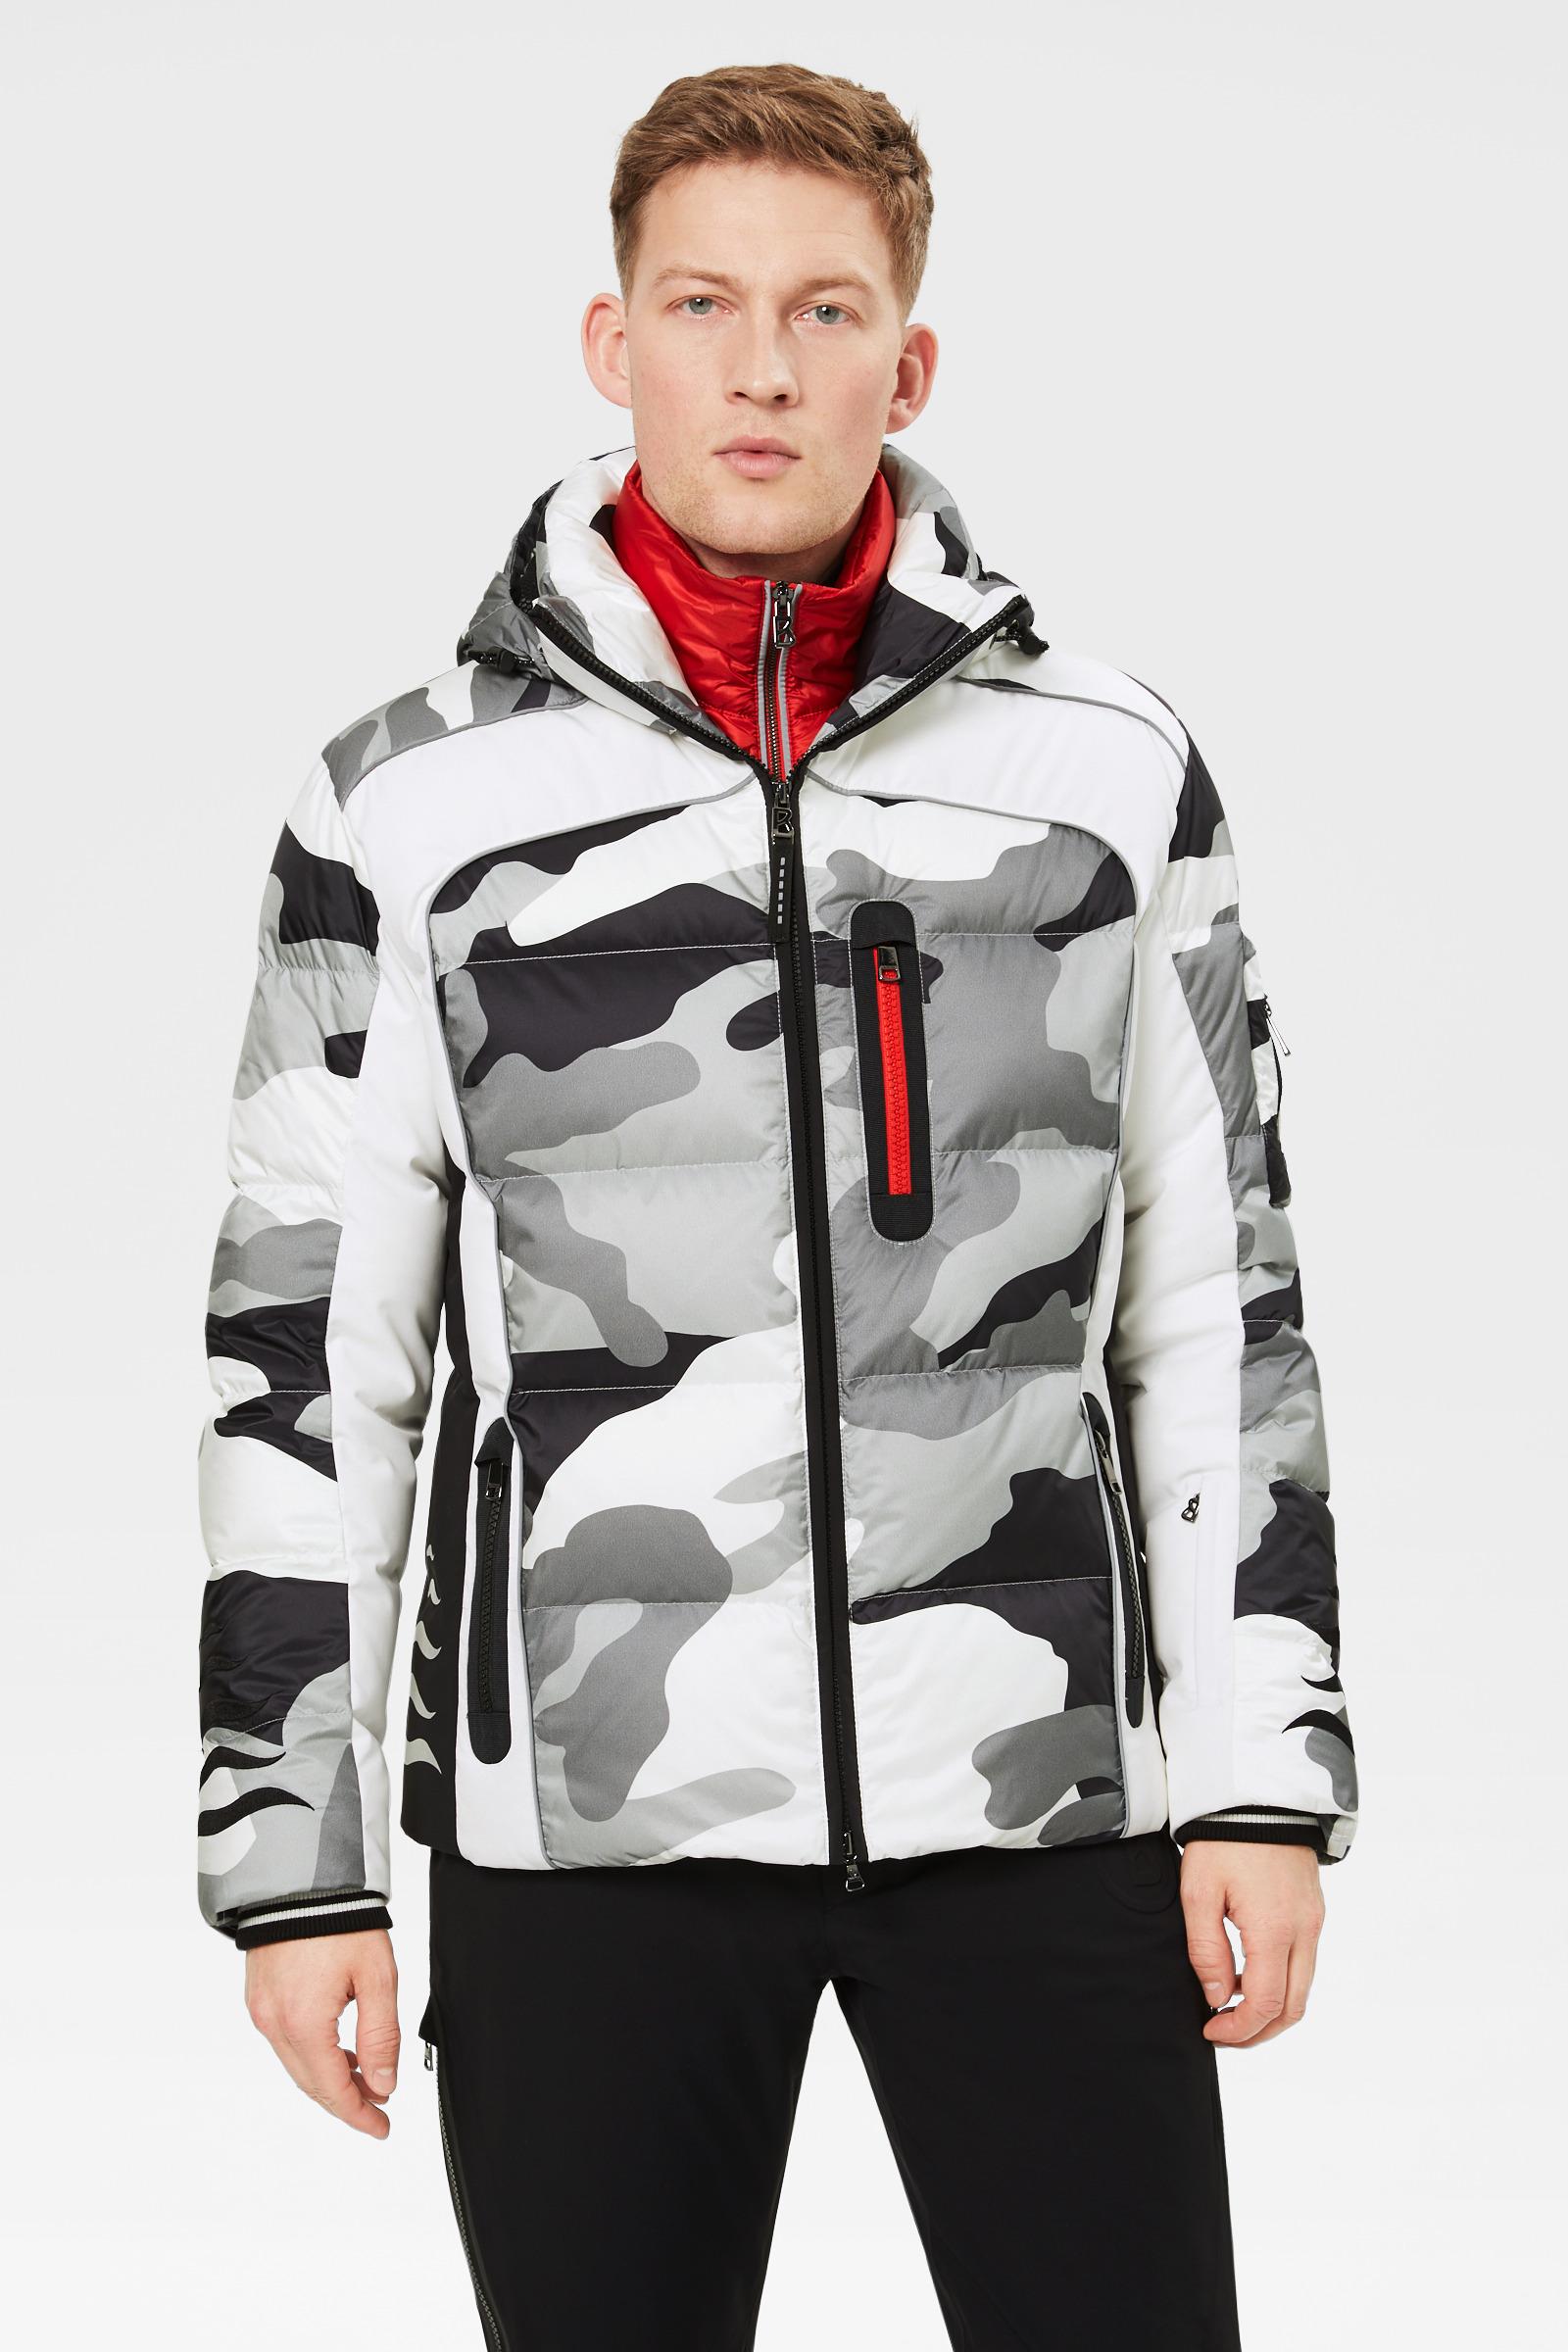 Bogner Jay Down Ski Jacket In Off-white/black/gray for Men | Lyst Canada